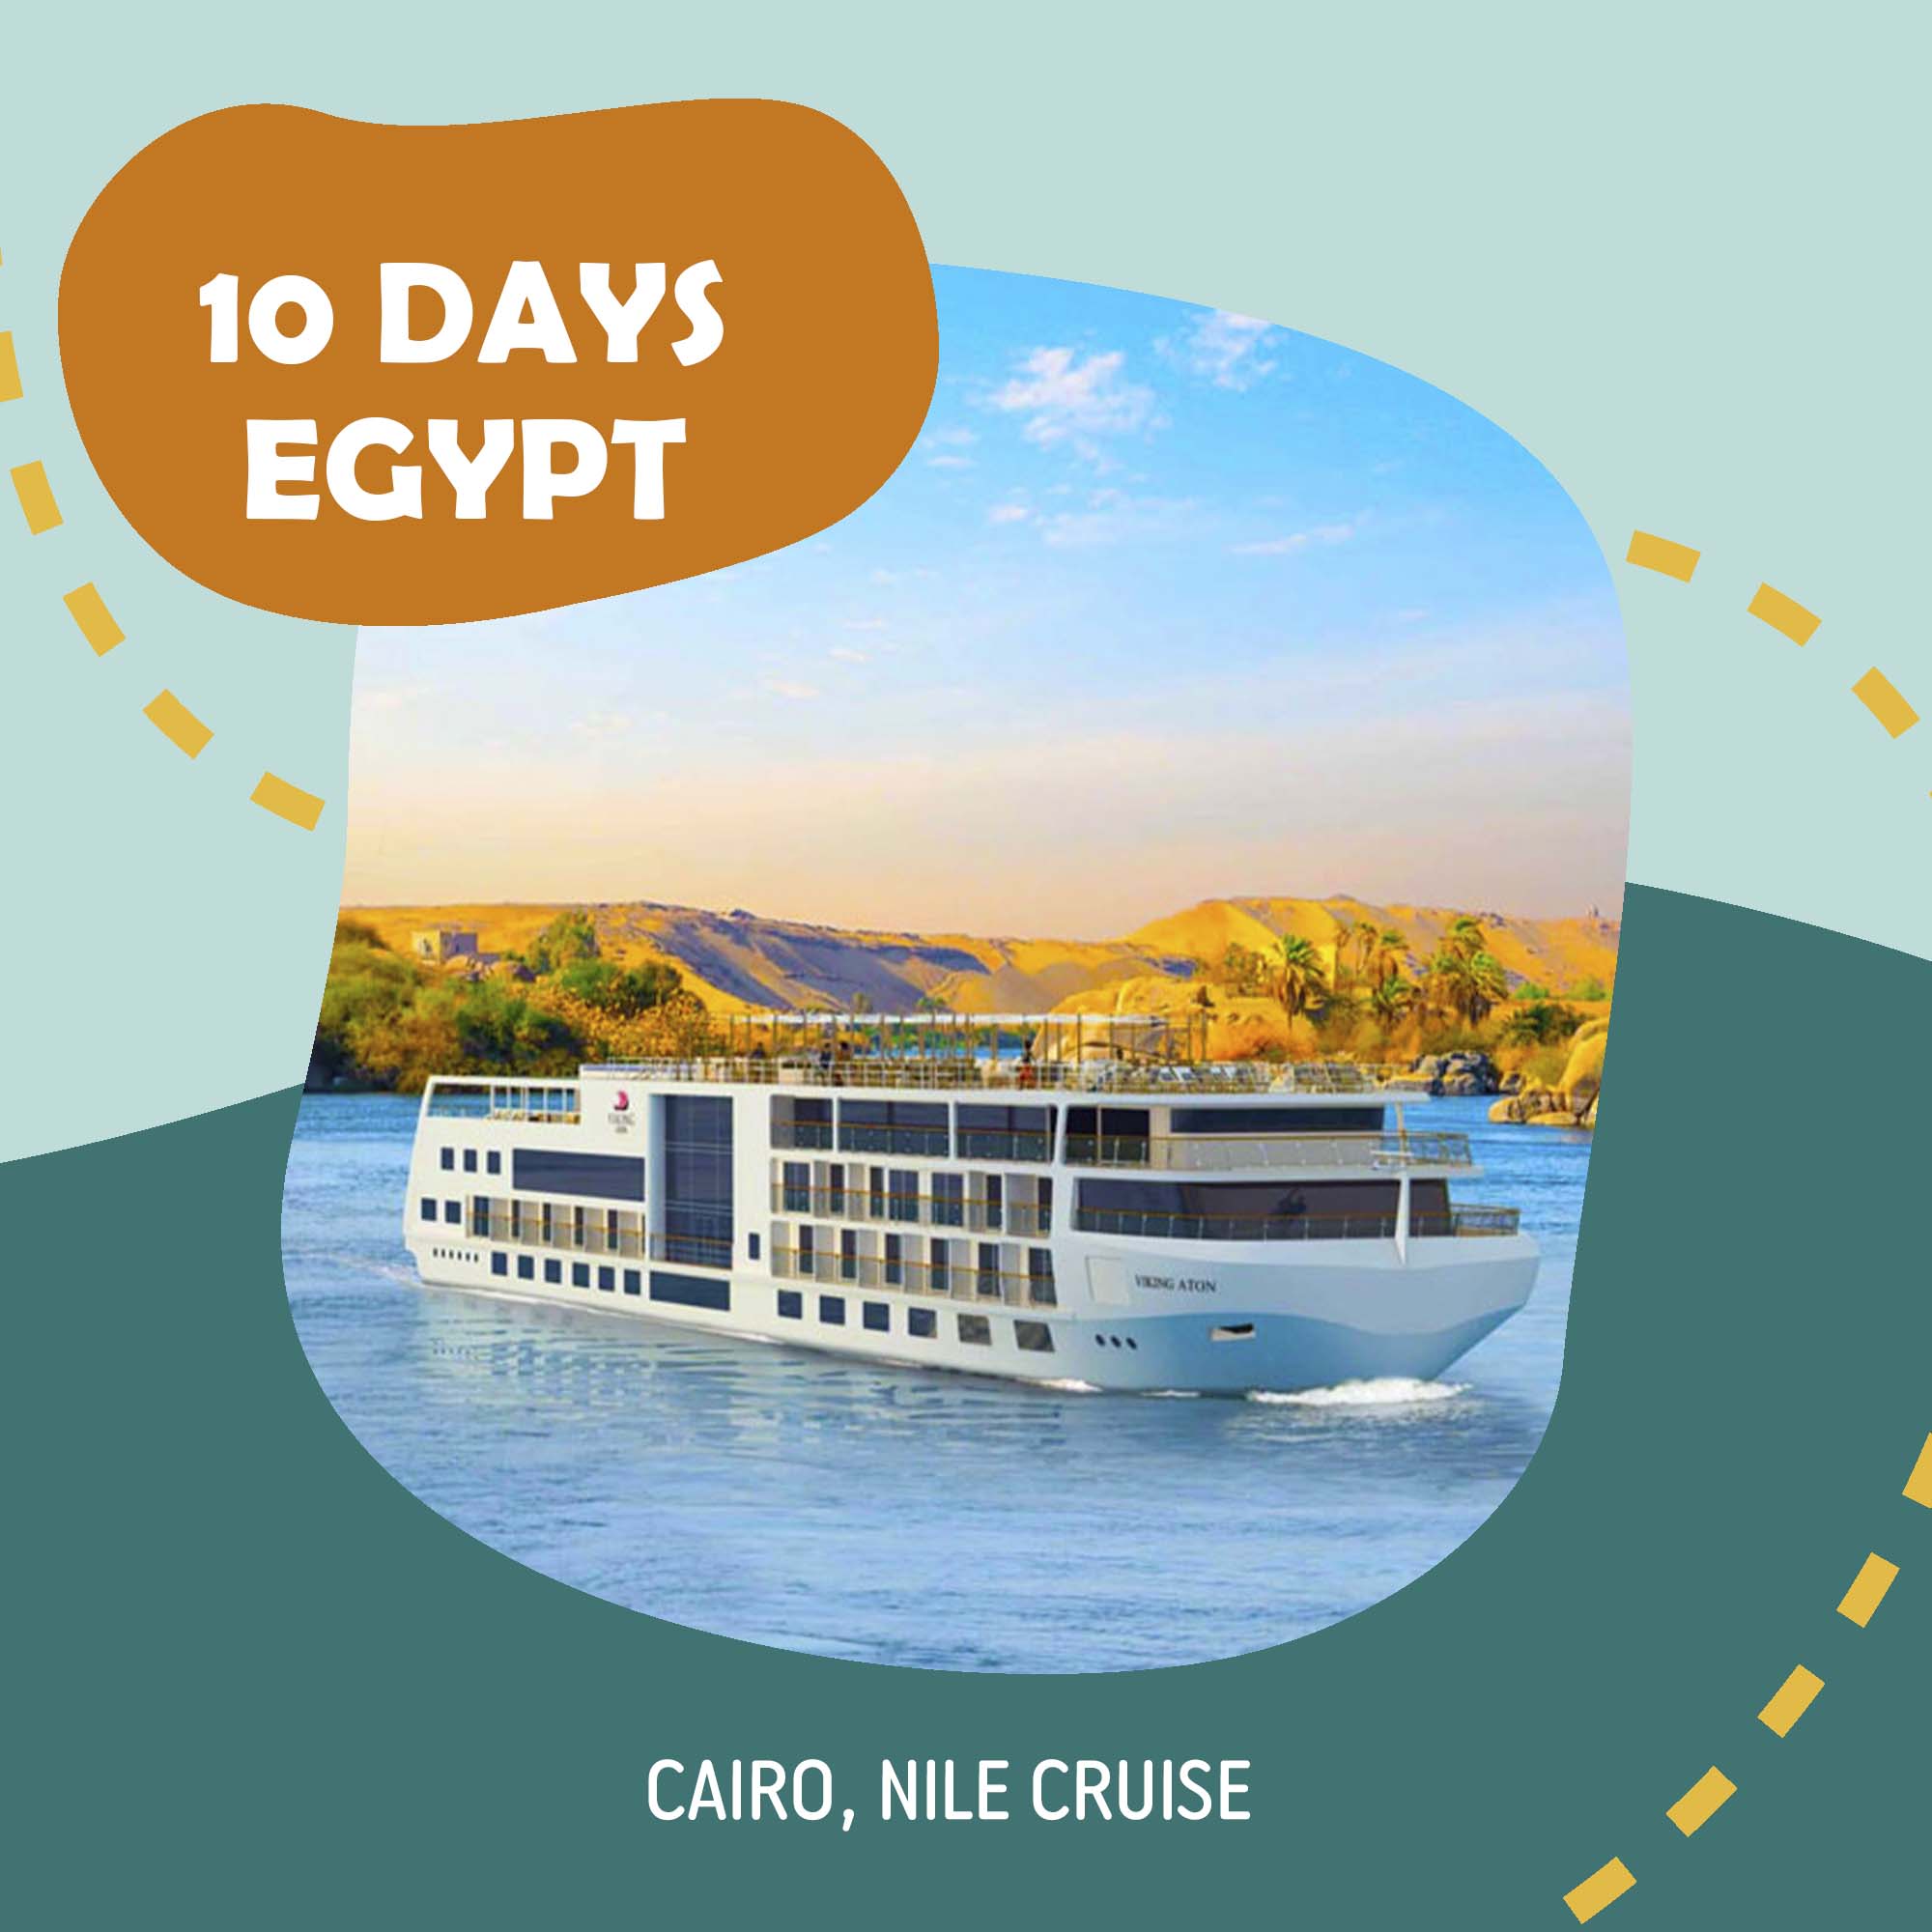 10 DAYS EGYPT CAIRO, NILE CRUISE